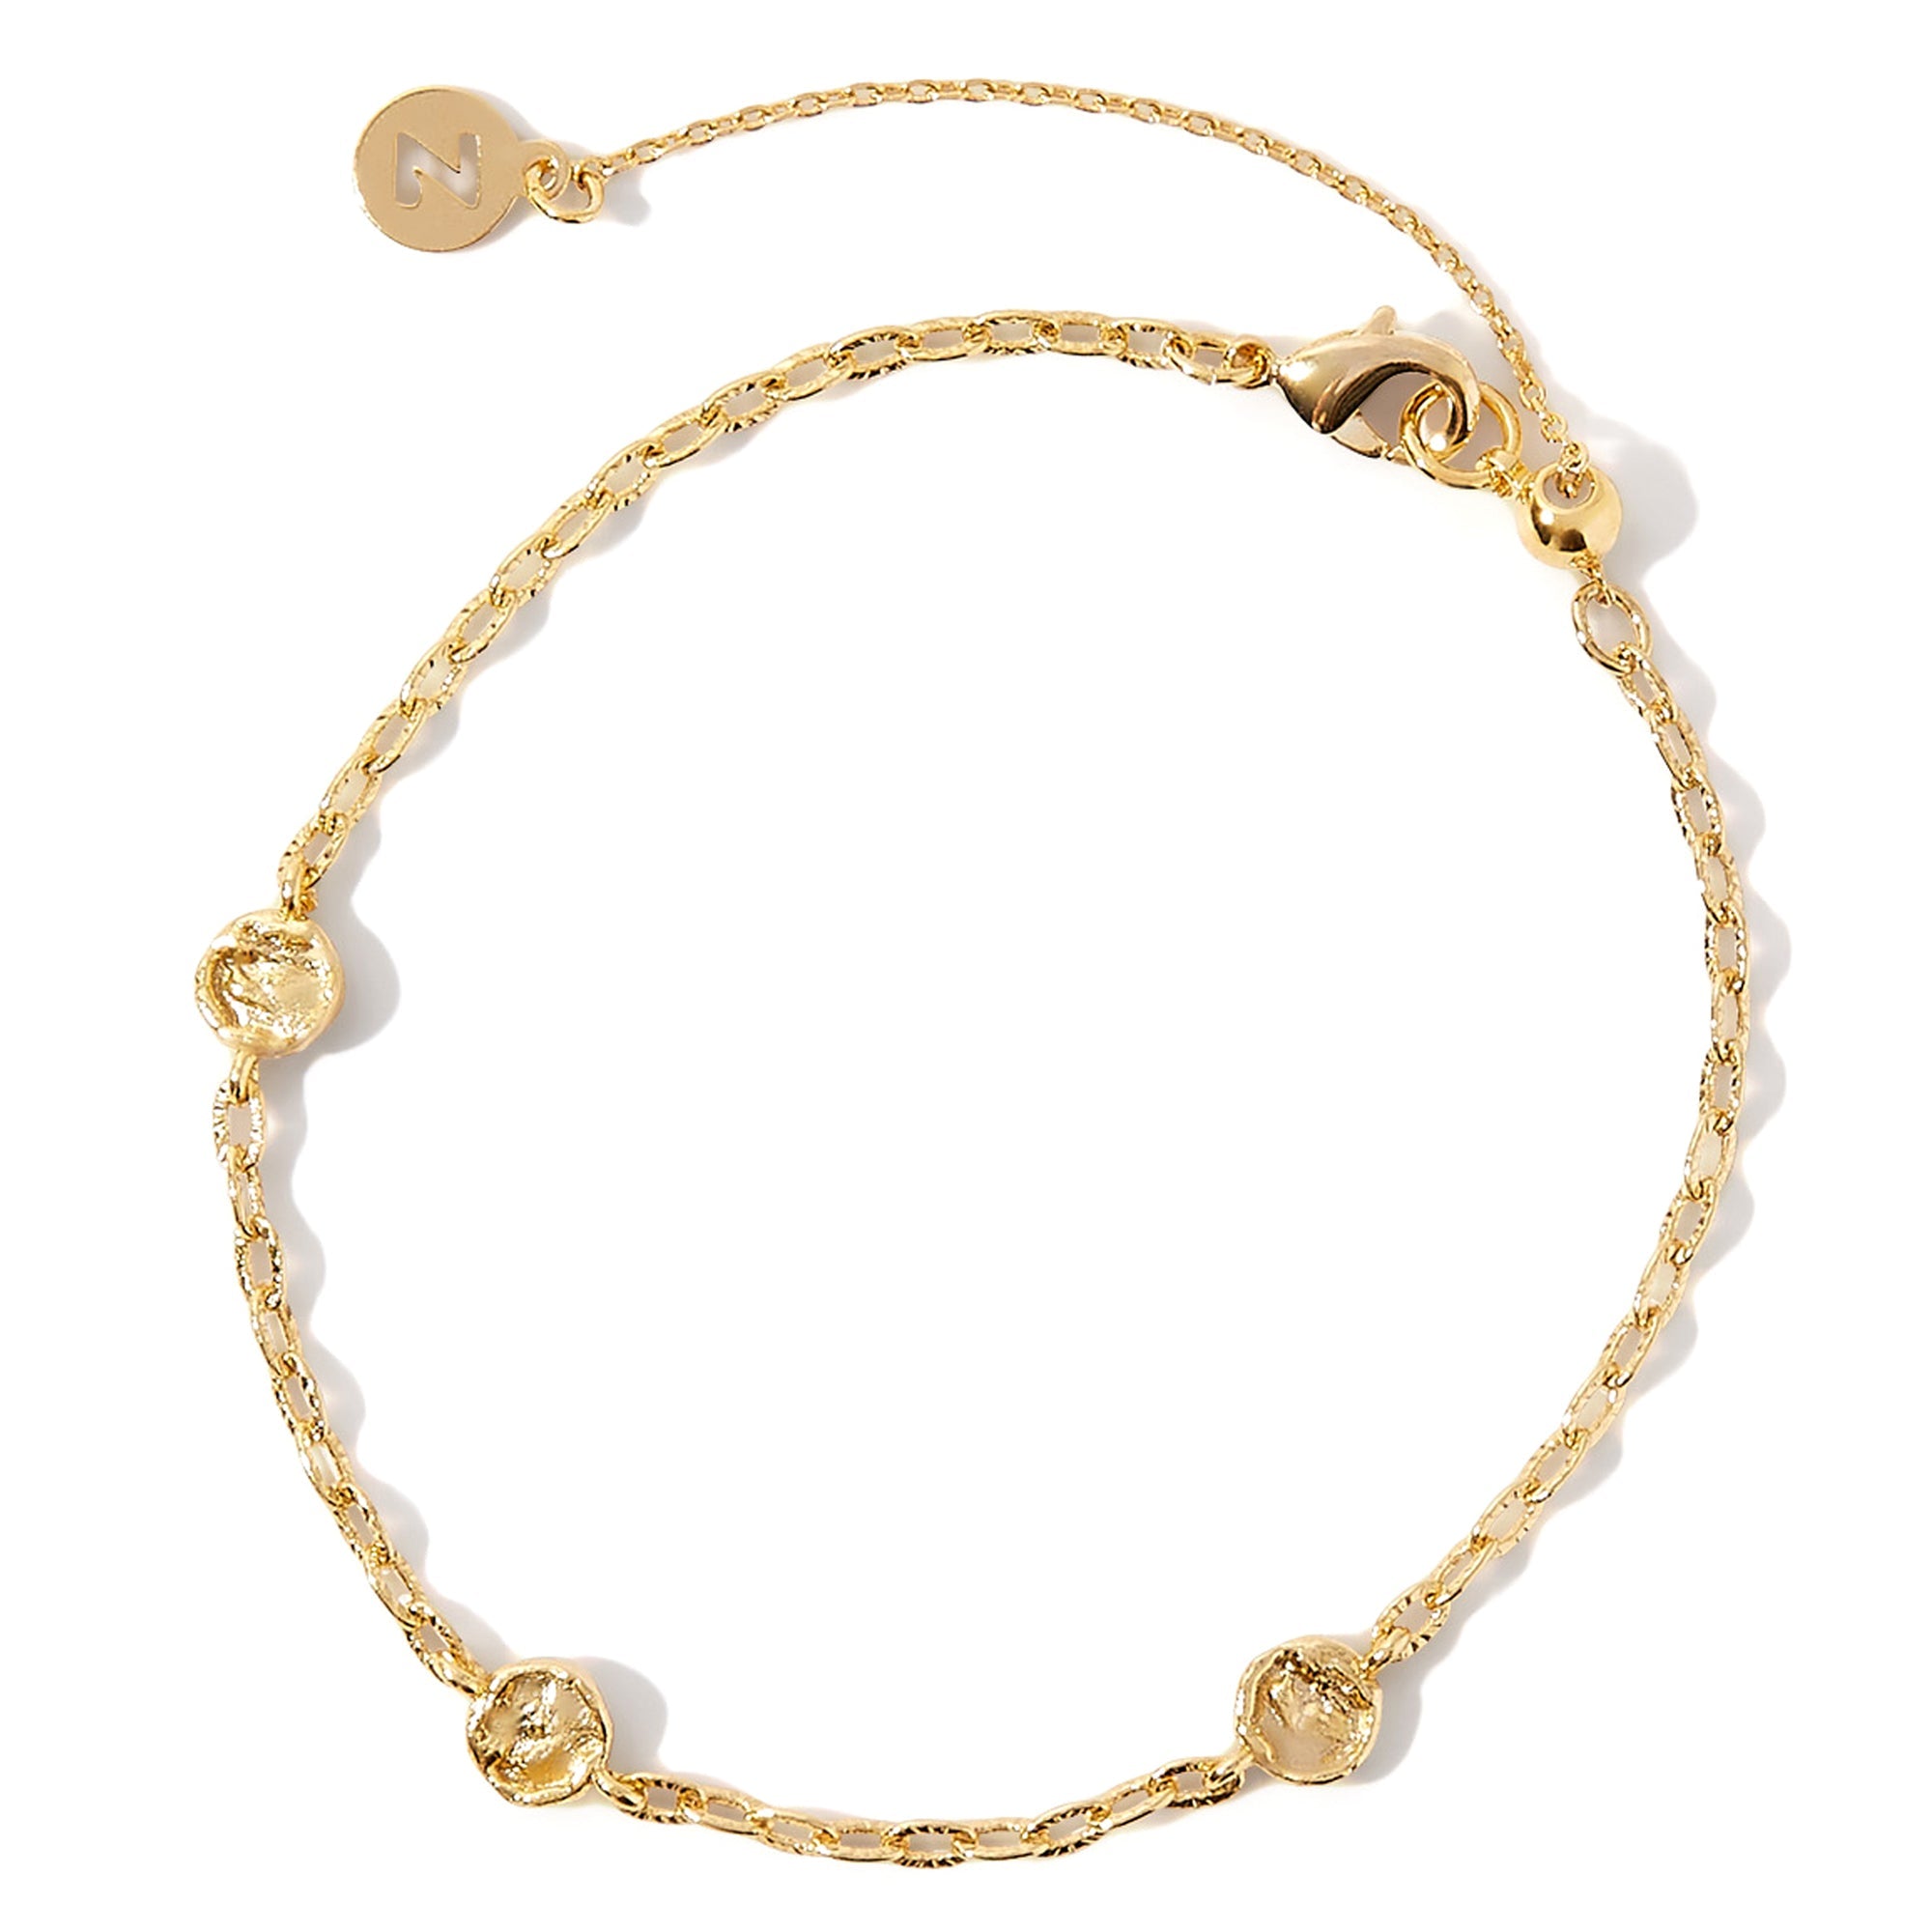 Gold Italian Chain Steel Bracelet with Flowers Fiyatı | Allday